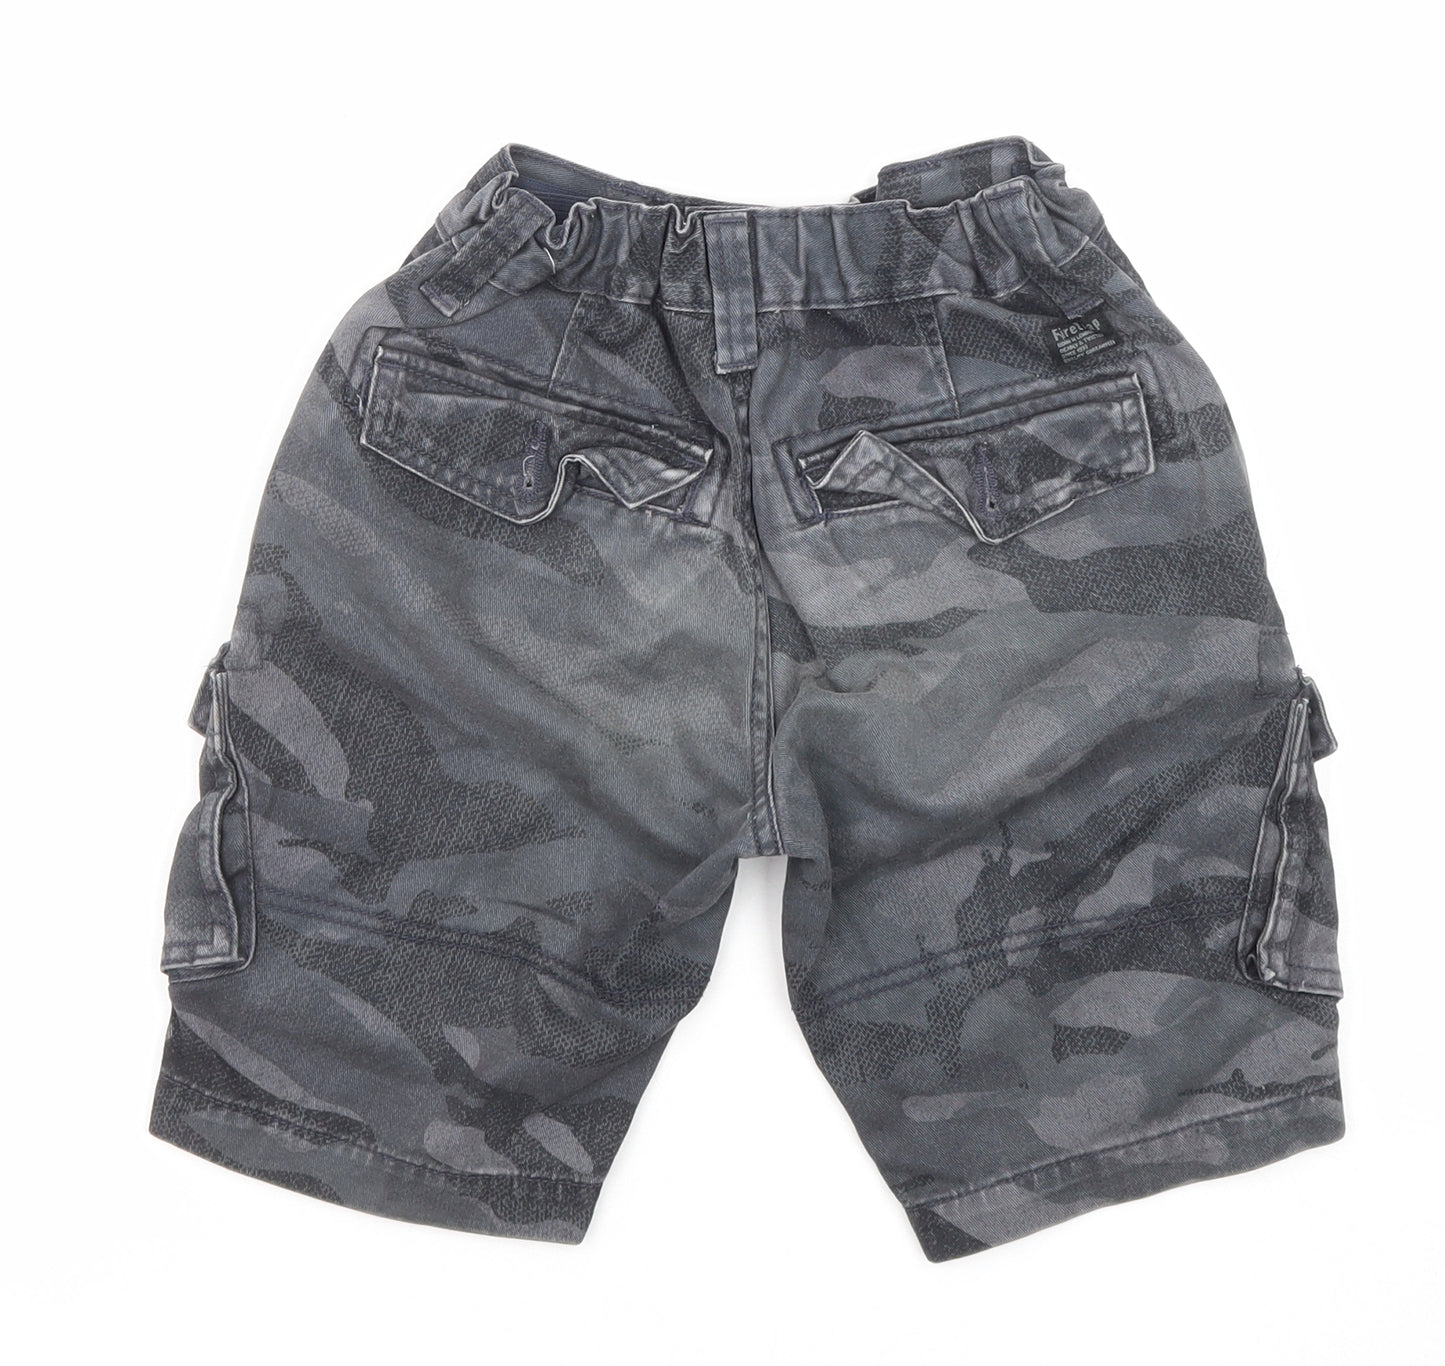 Firetrap Boys Grey Camouflage Cotton Cargo Shorts Size 7-8 Years Regular Zip